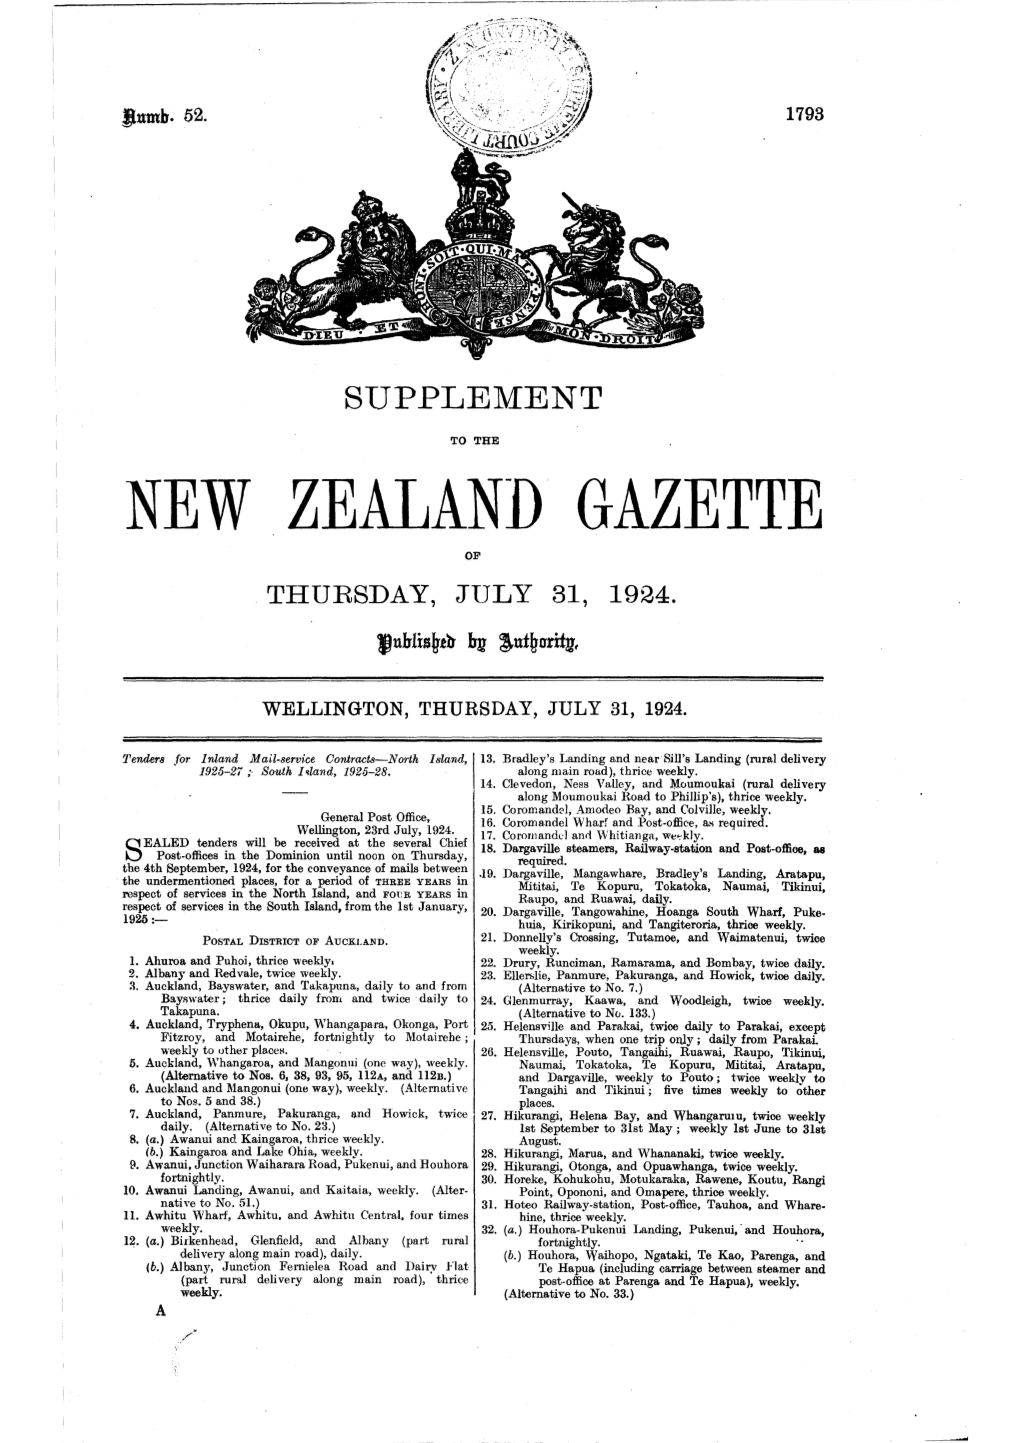 New Zealand. Gazette of Thursday, July 31, 1924